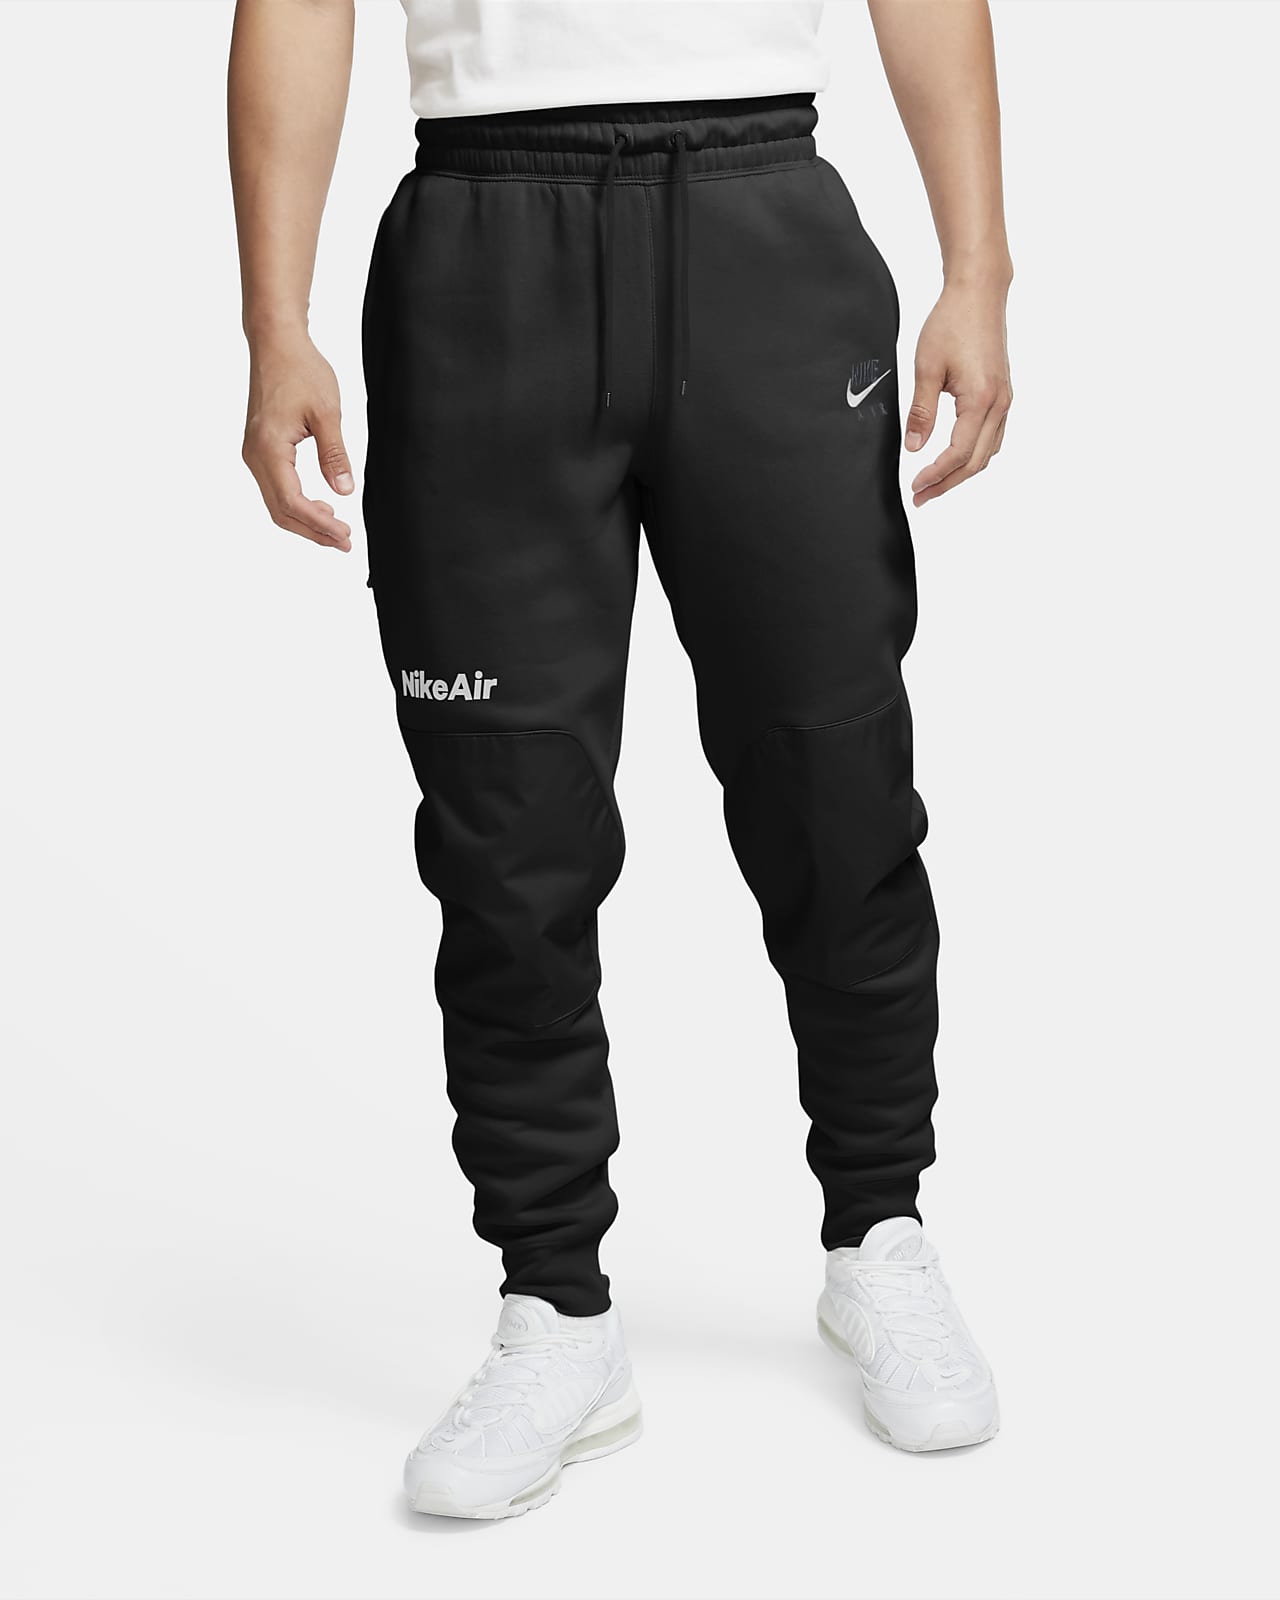 Nike Air Men's Fleece Trousers. Nike FI